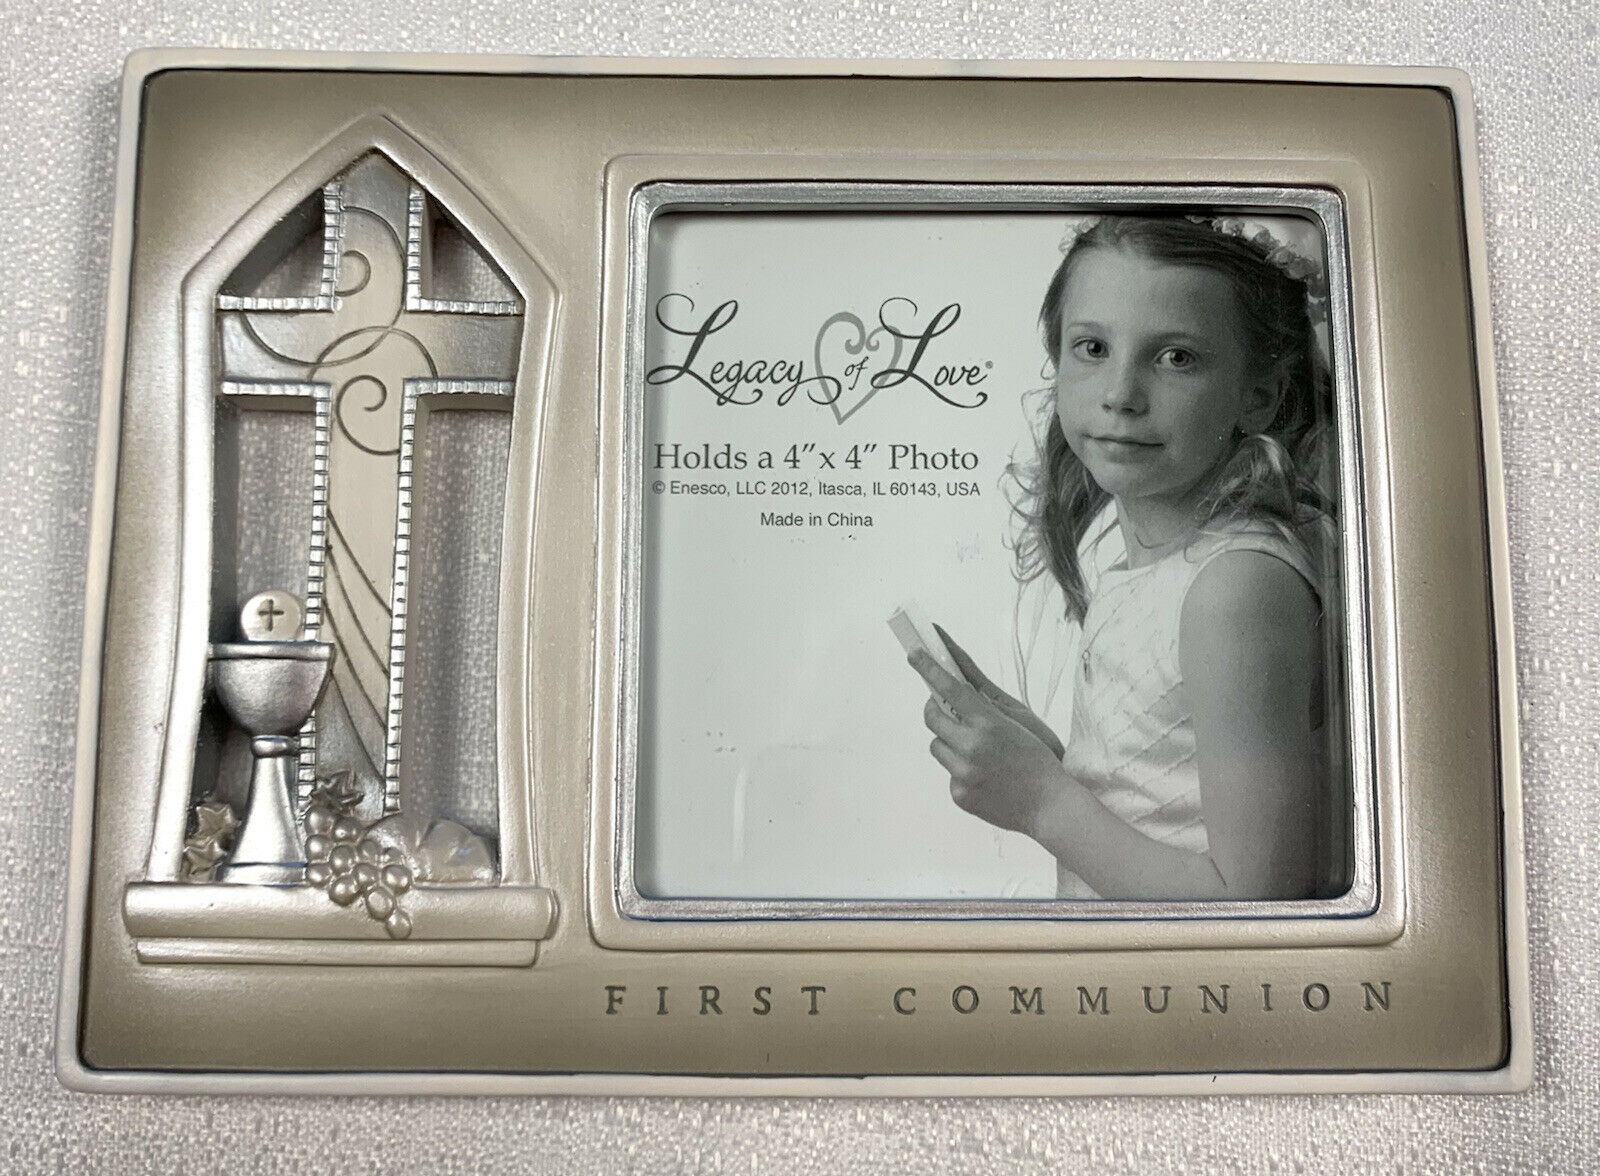 Enesco  First Communion Photo Frame   Legacy Of Love / Kim Lawrence   4x4" Photo